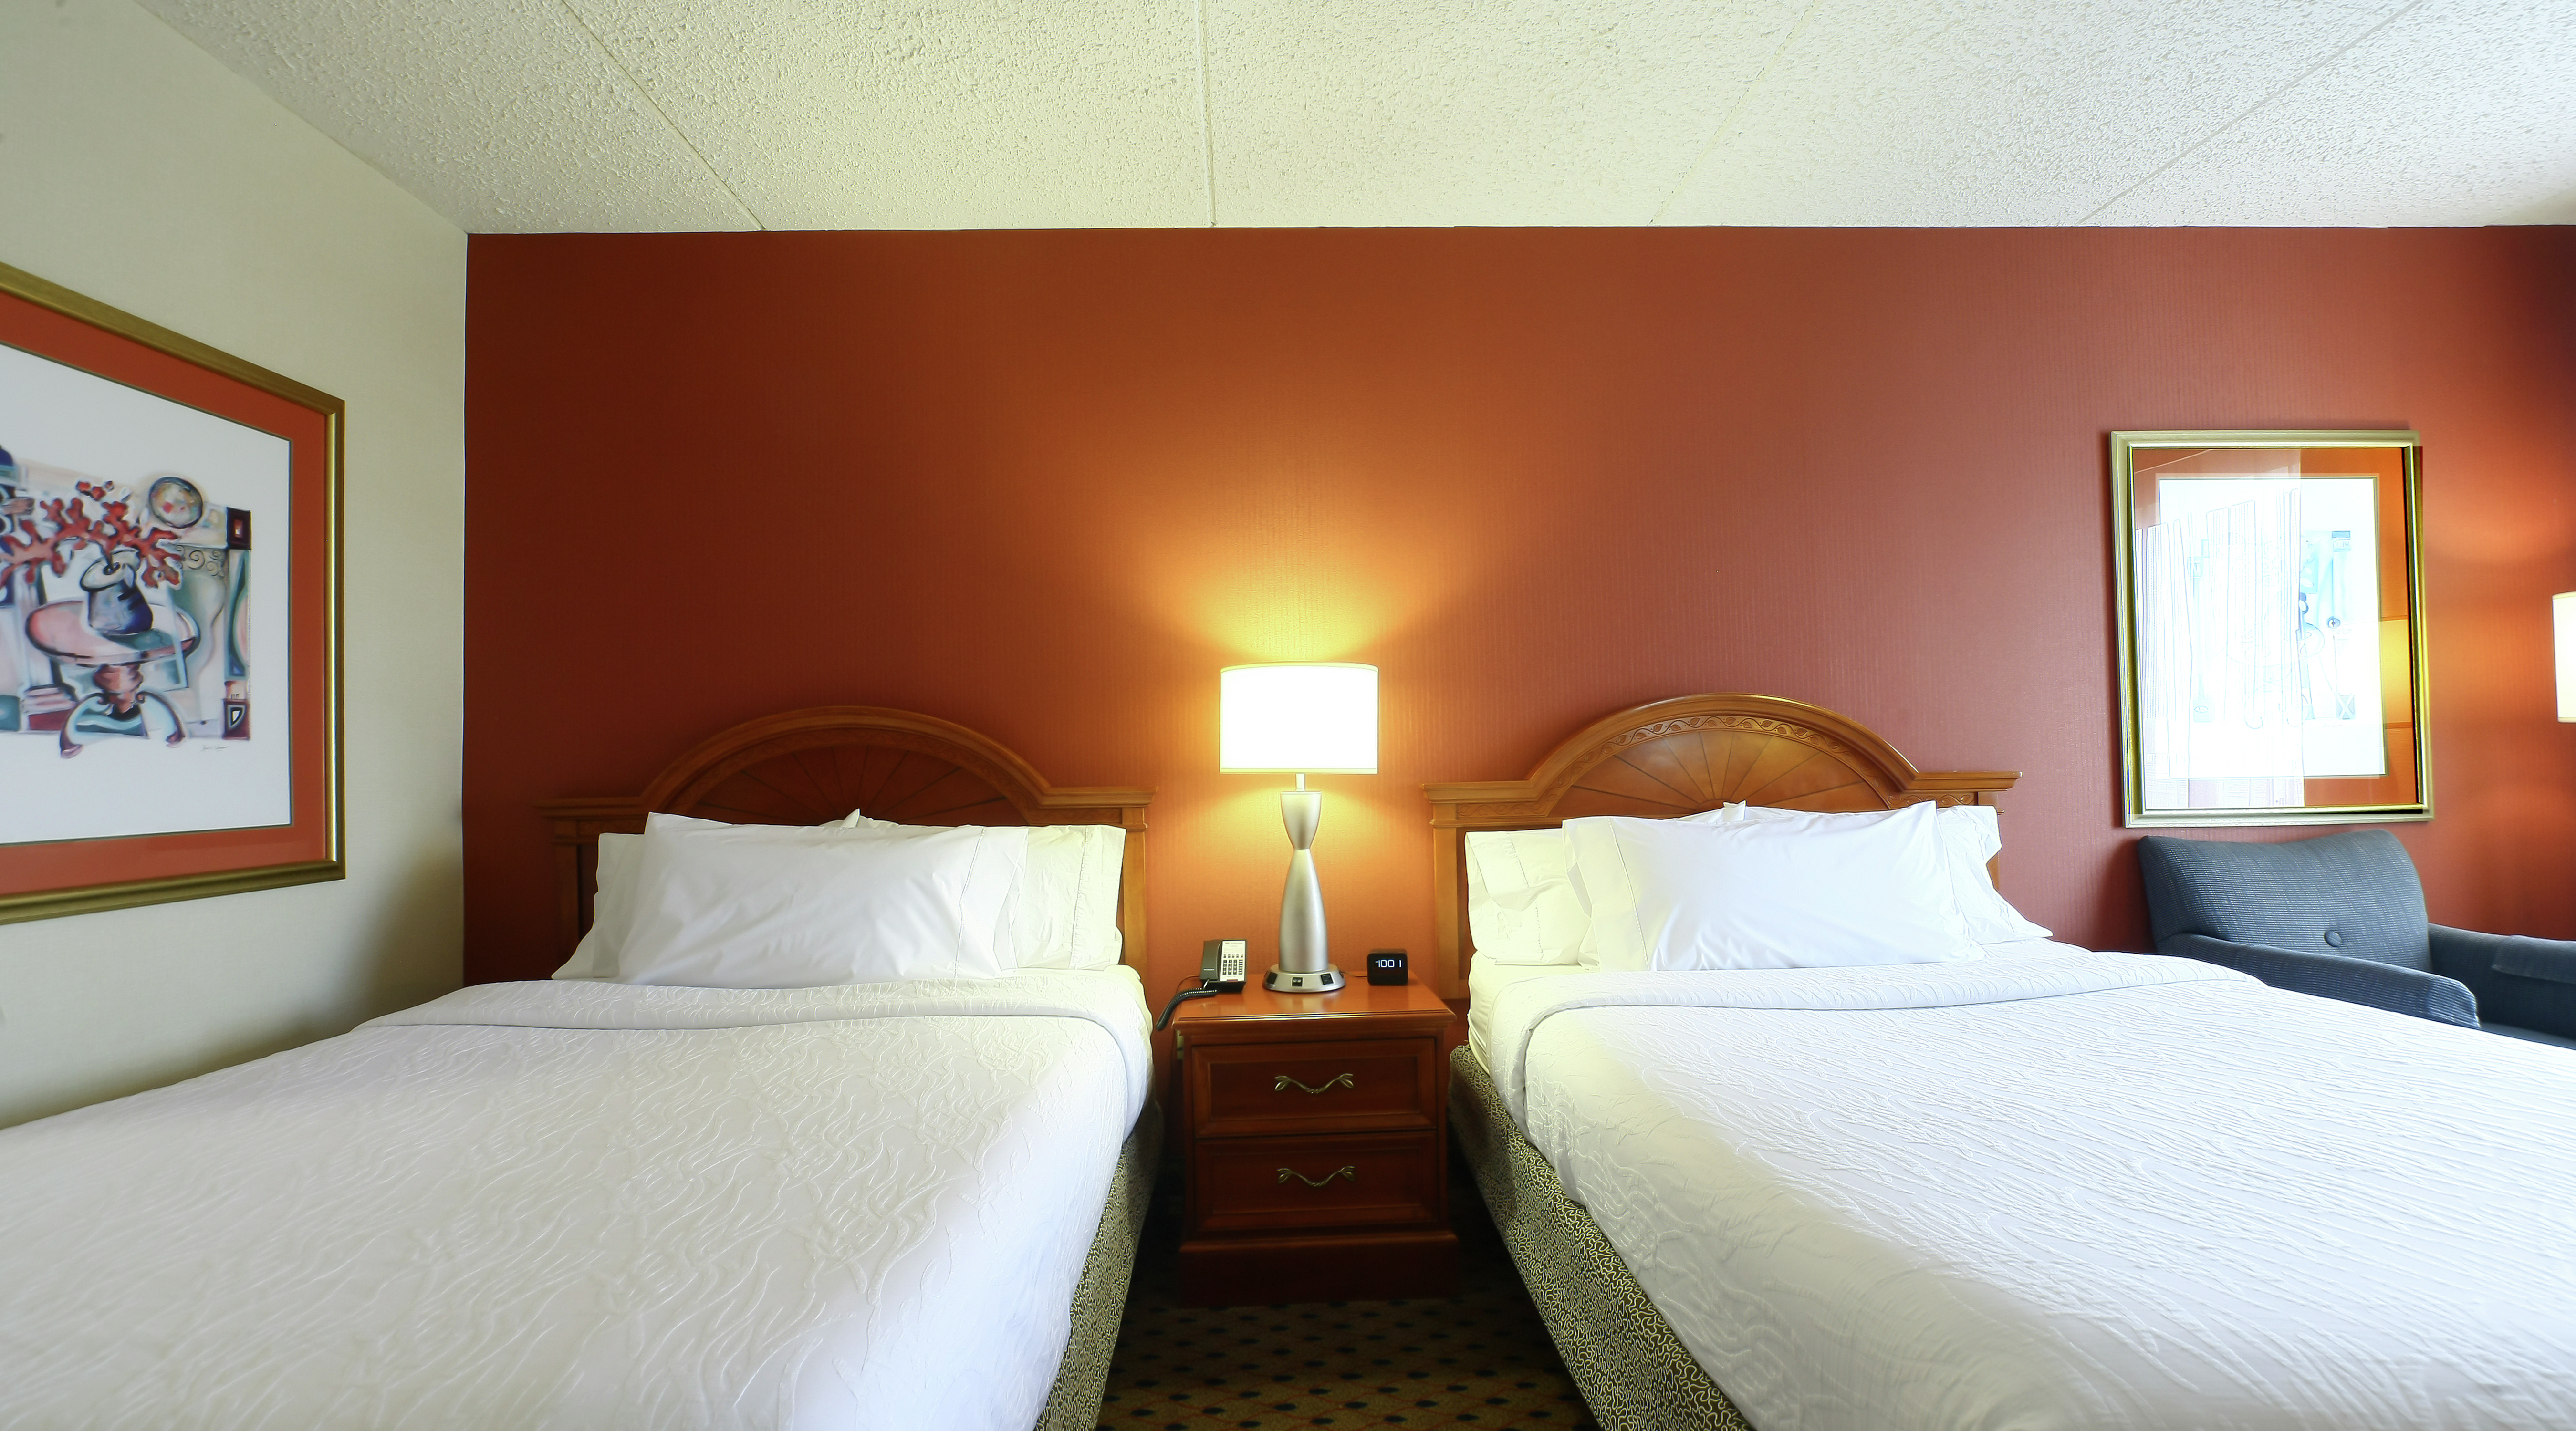 Two Beds in Double Queen Guest Room